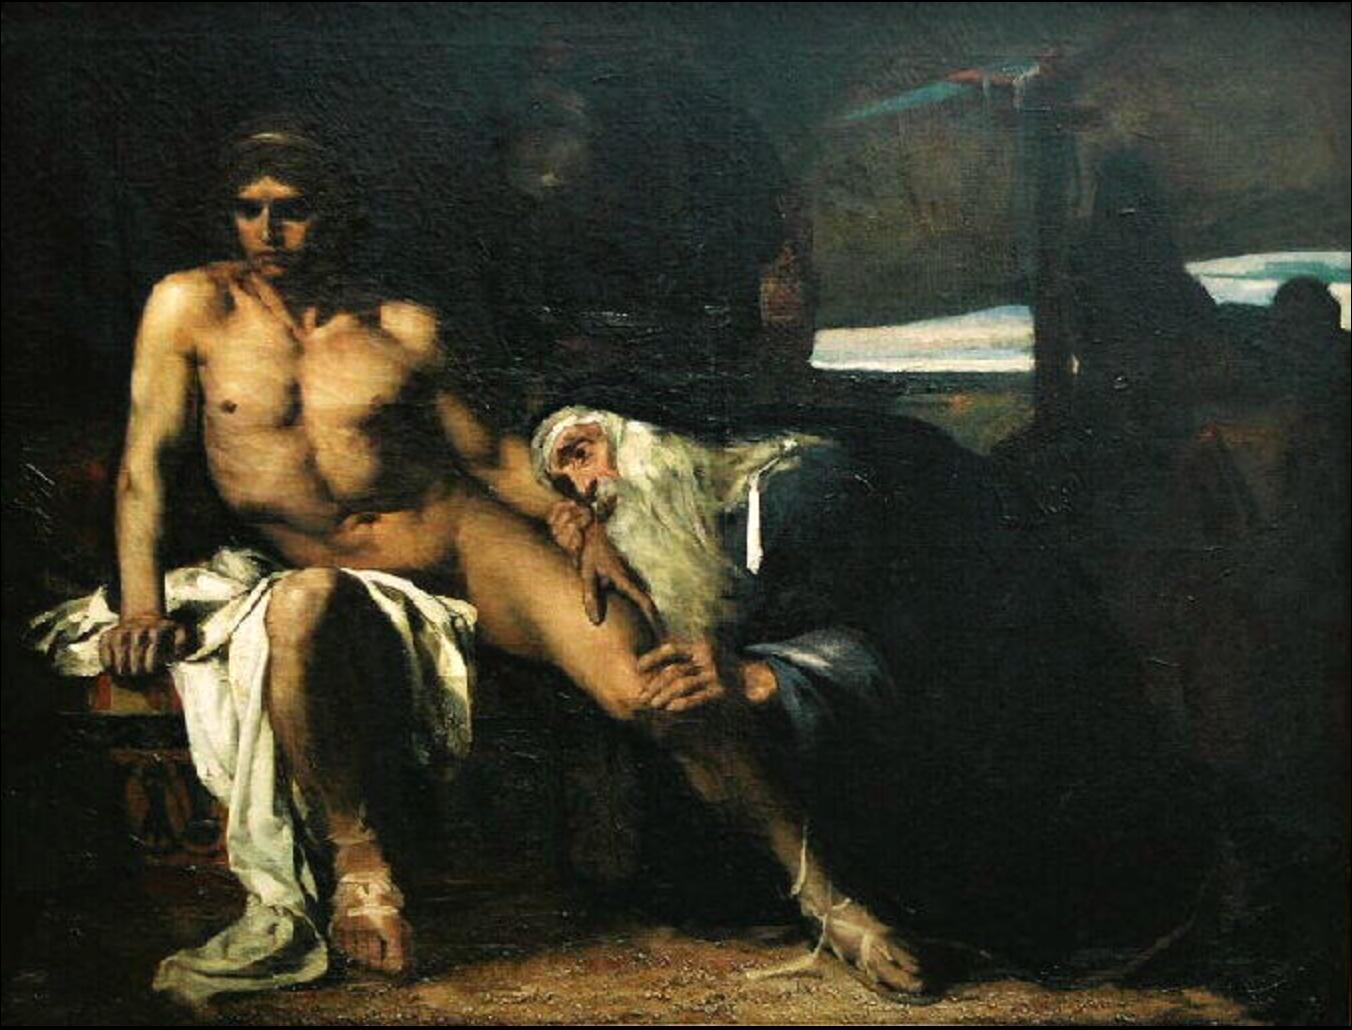 Priam at the Feet of Achilles (1876), Eugène Carrière